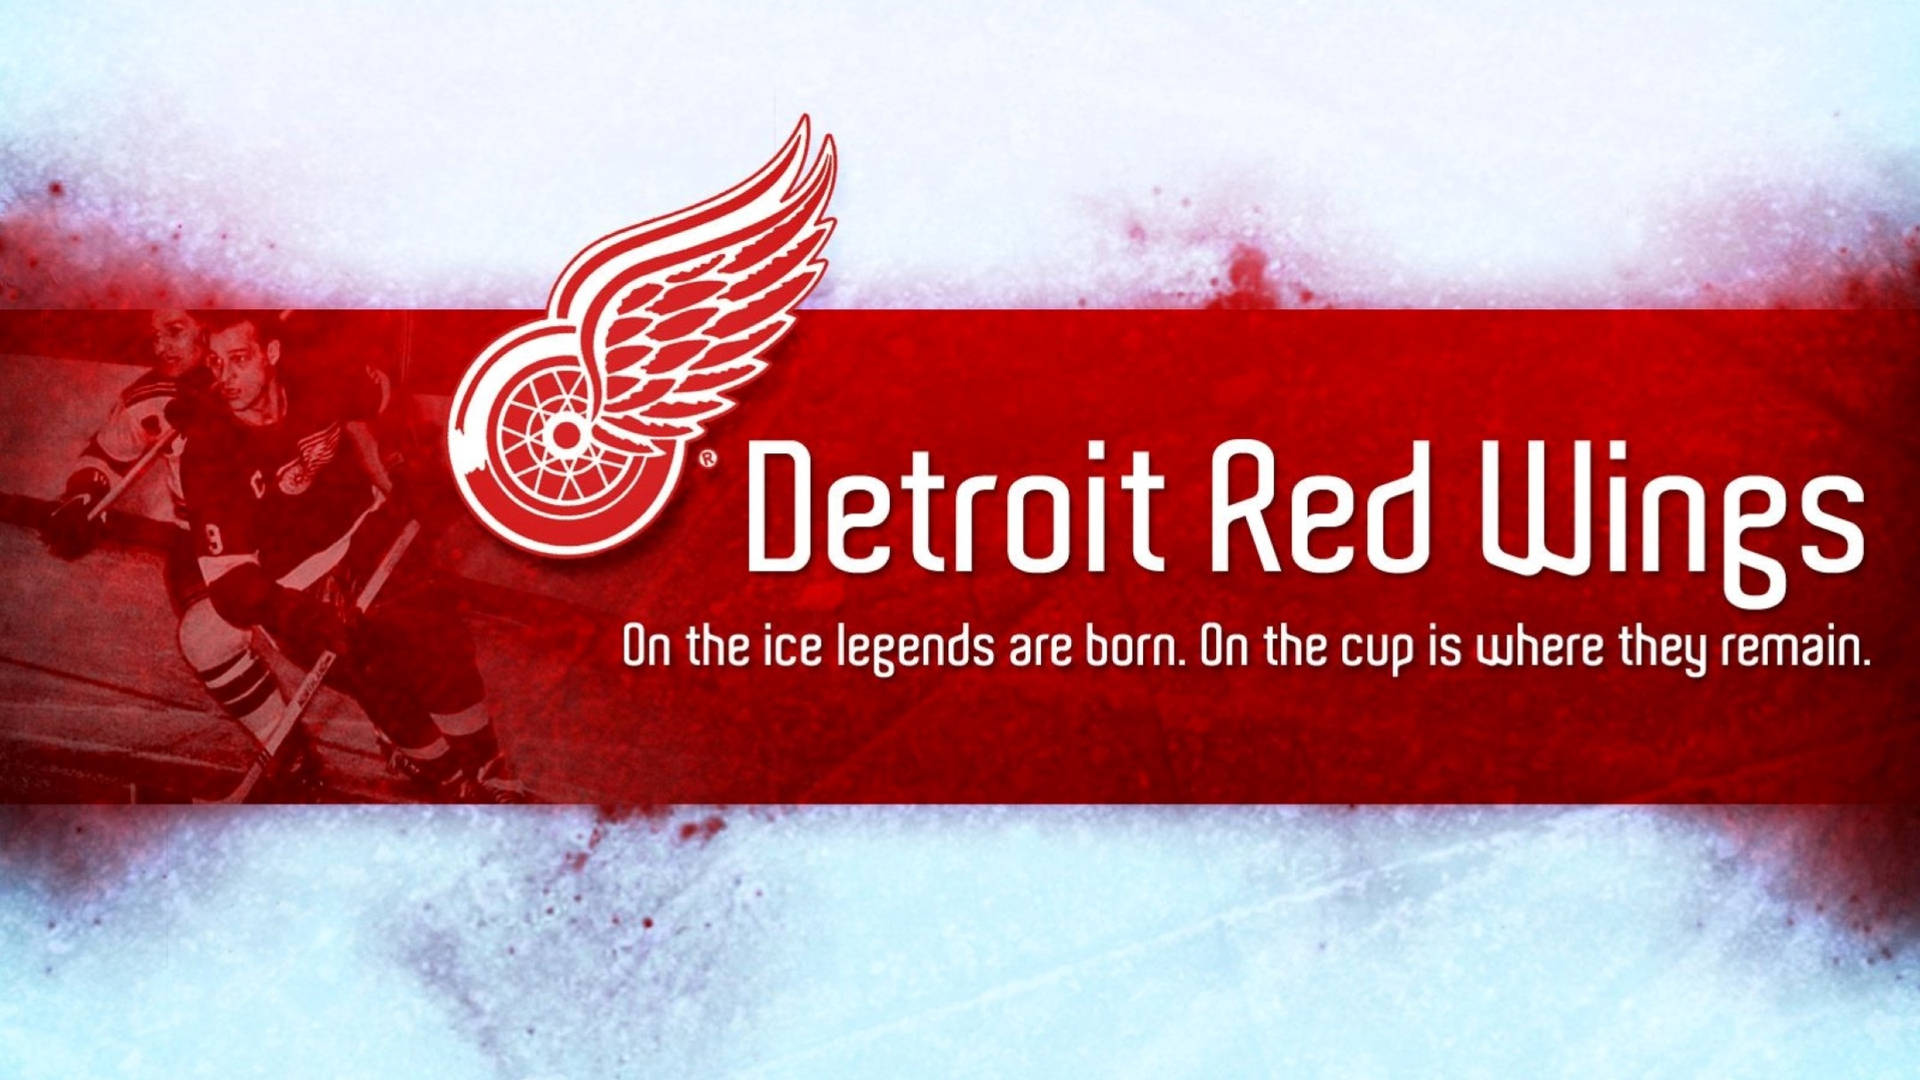 ArtStation - Detroit Red Wings Background